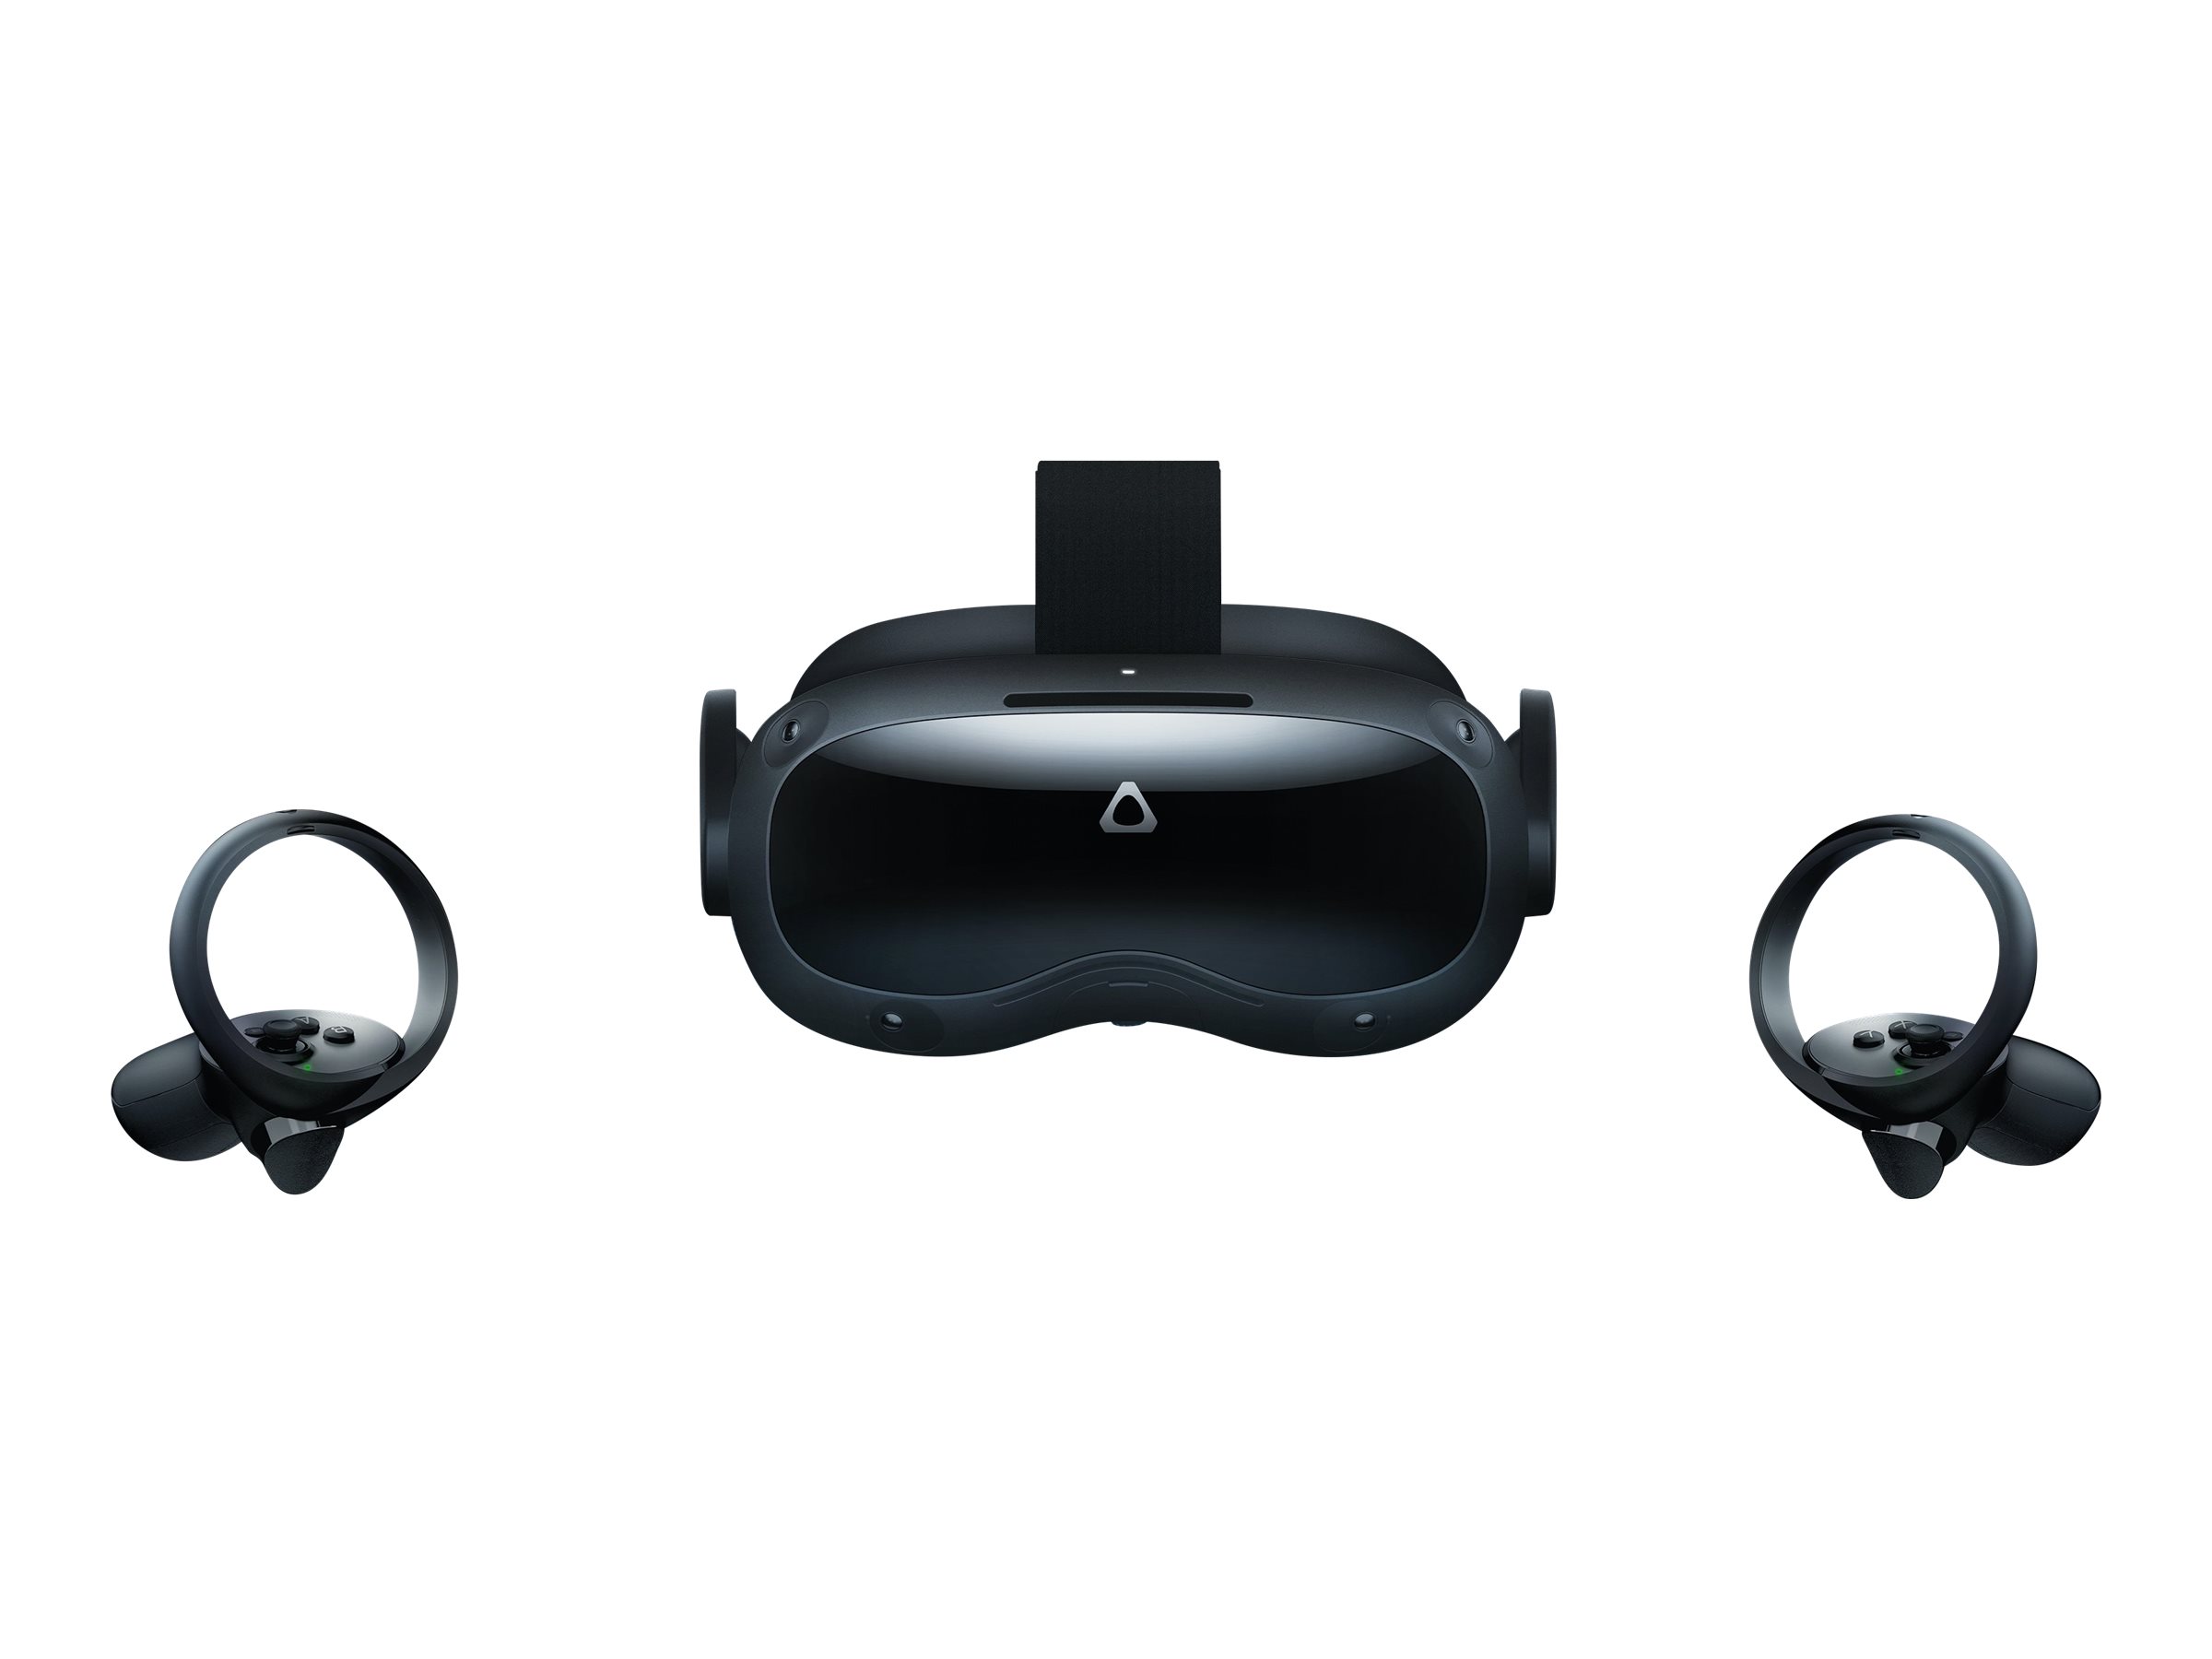 HTC VIVE Focus 3 - Virtual Reality-System @ 90 Hz